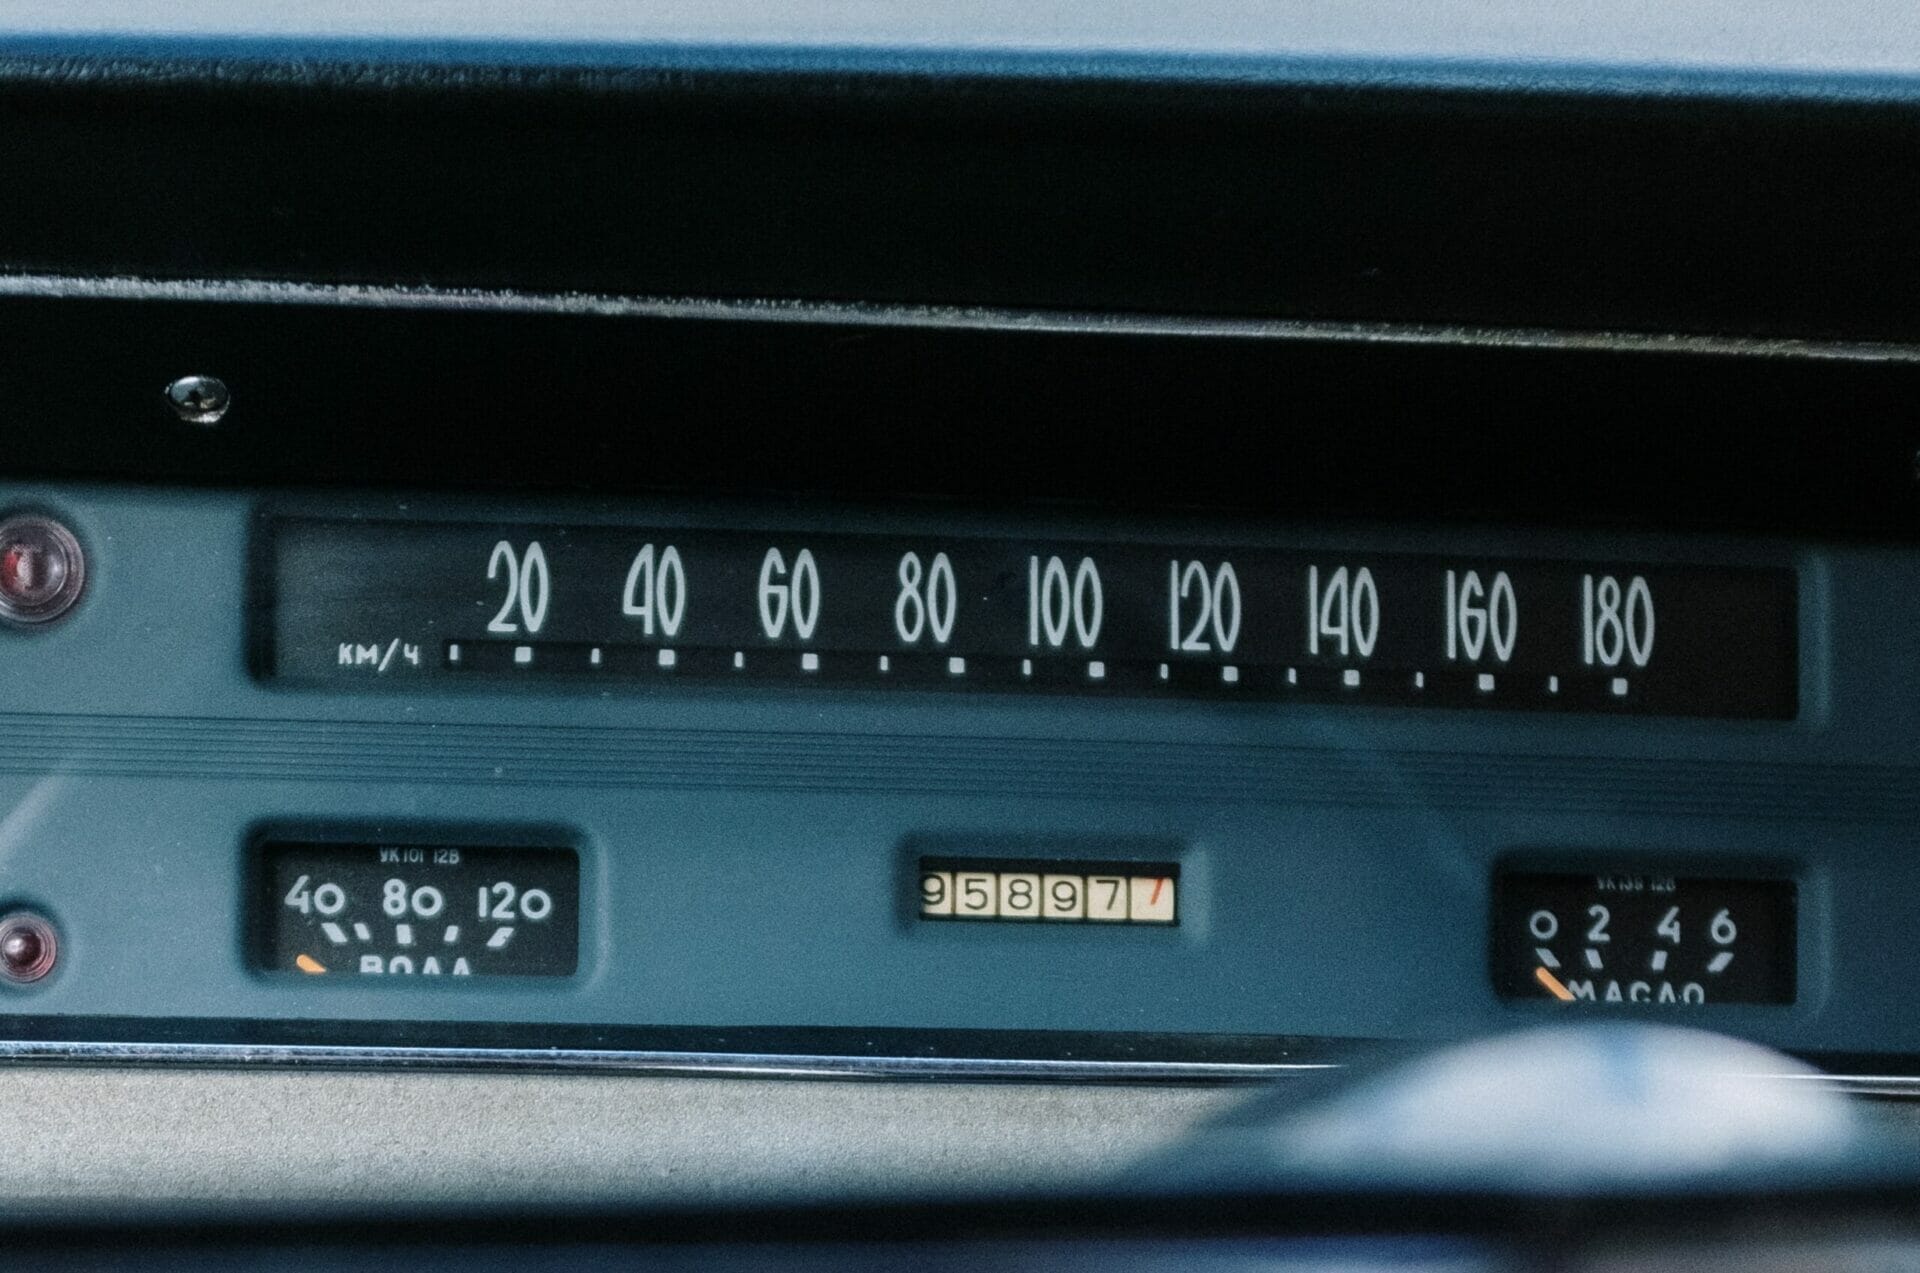 Analogue car dashboard displaying accelerator